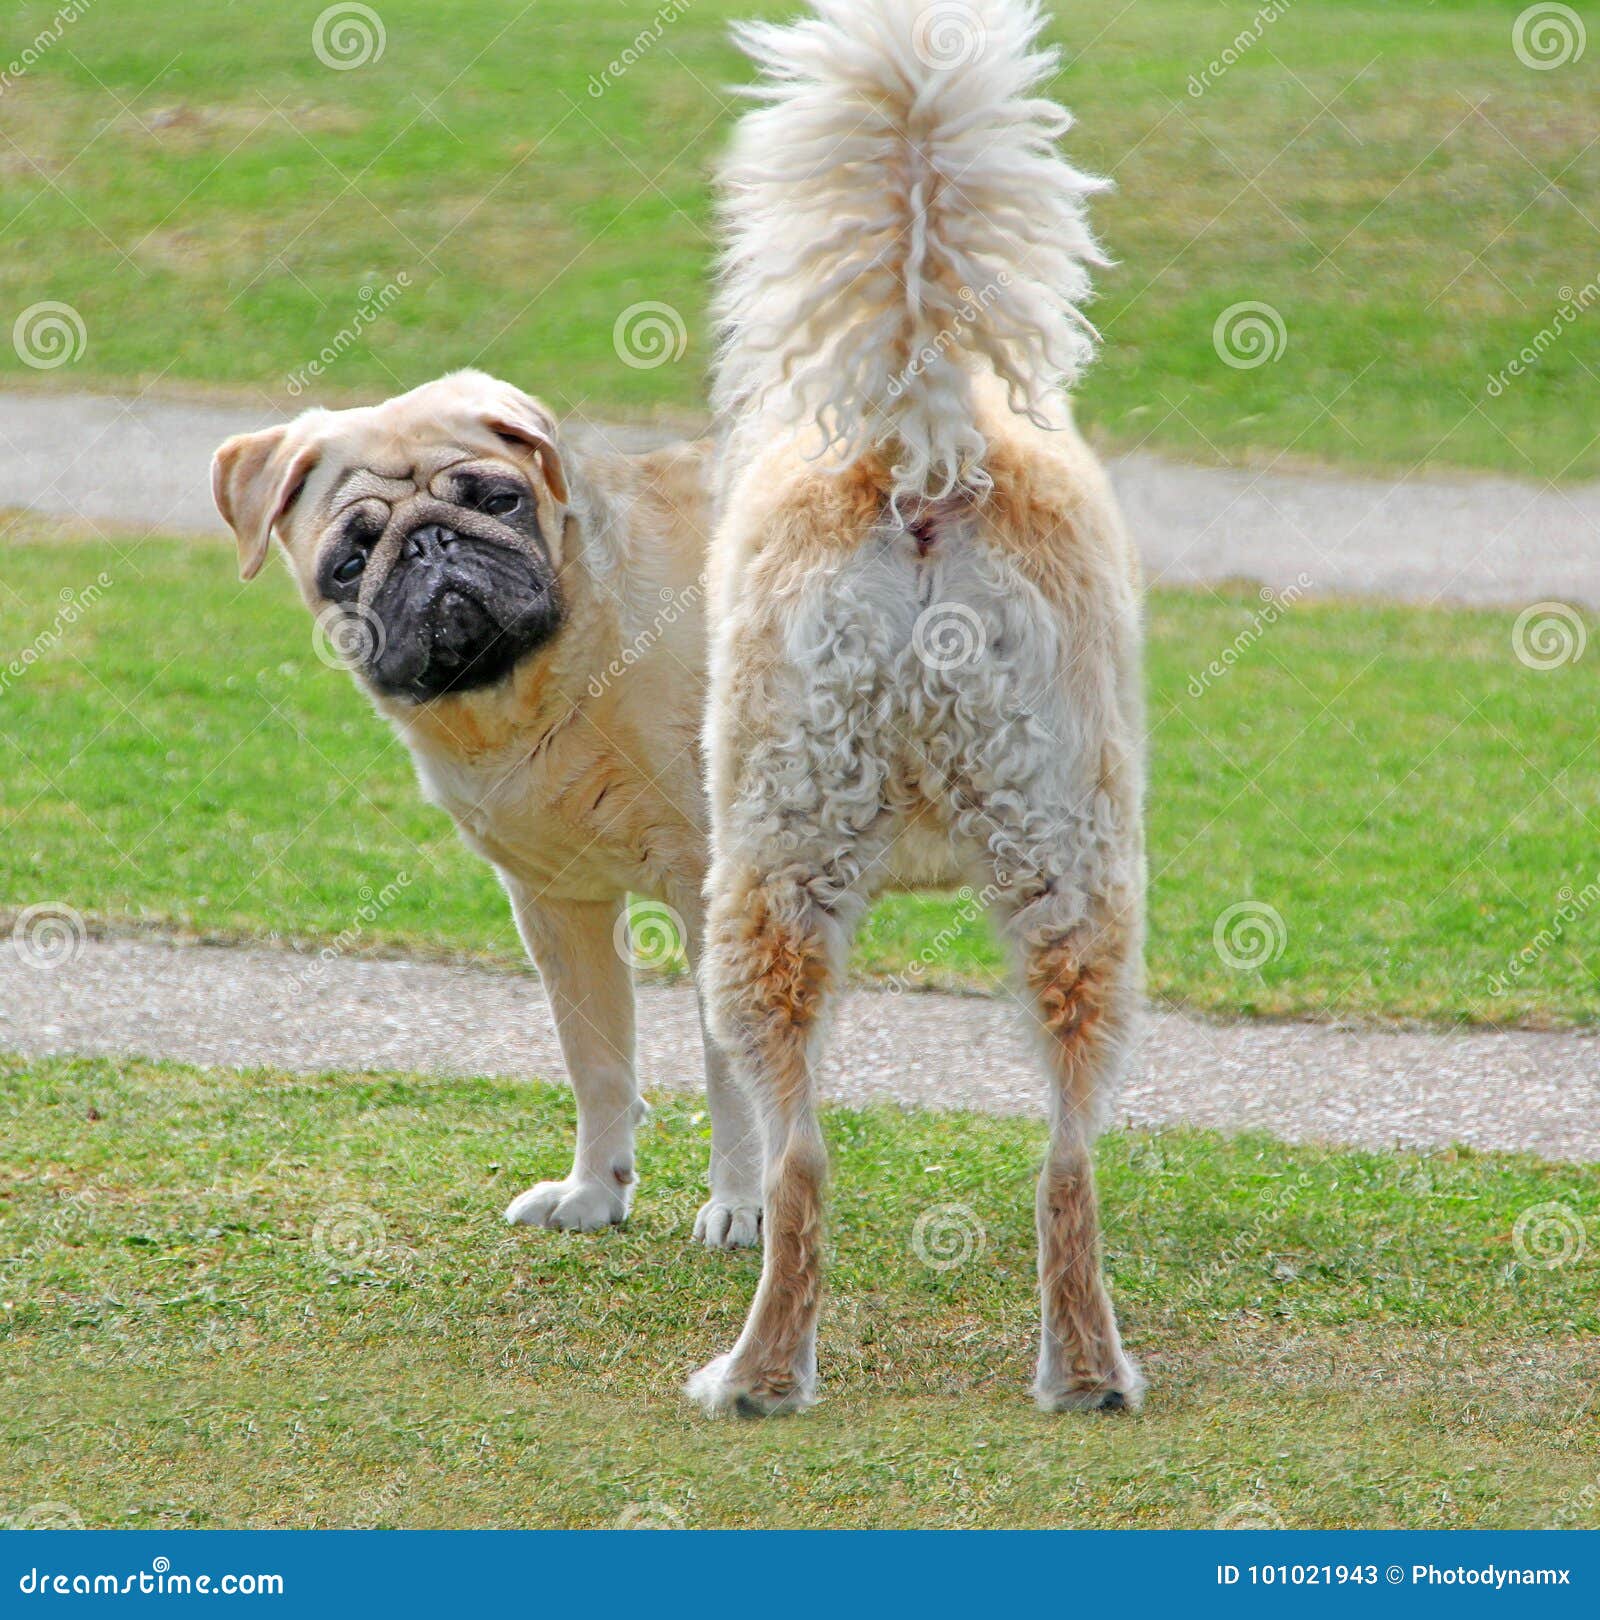 pugrador pedigree crossbreed dog